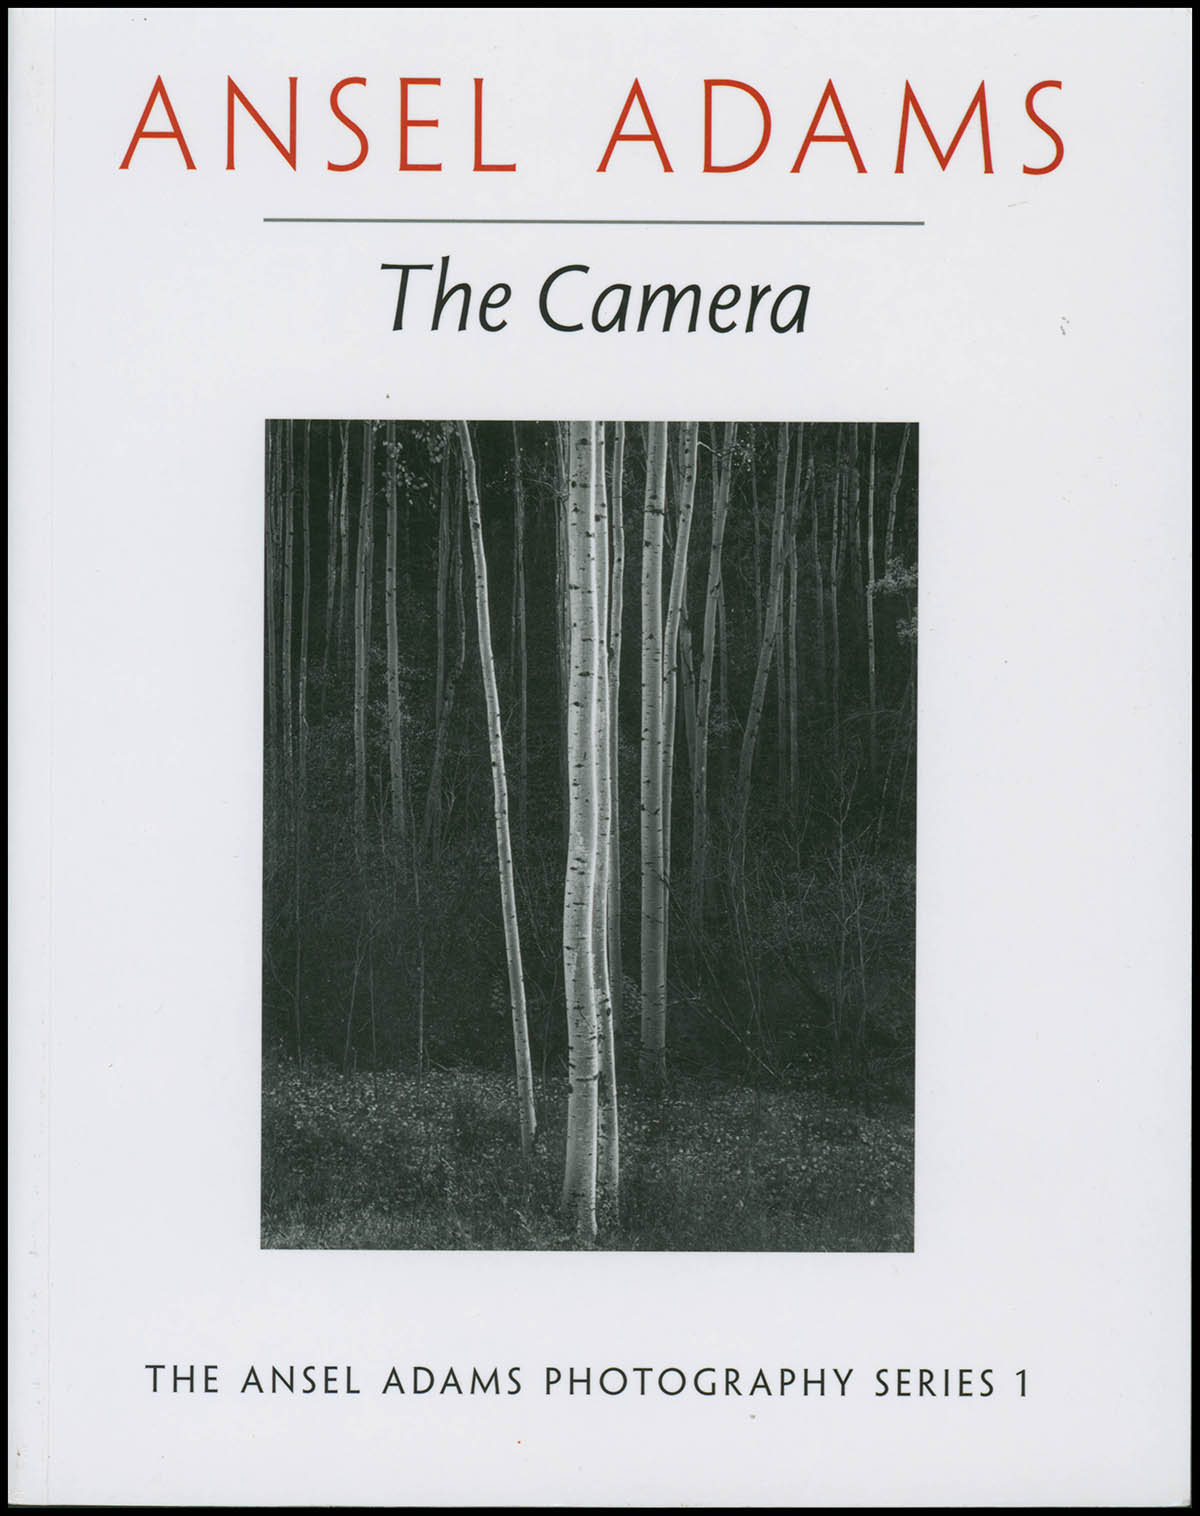 Adams, Ansel; Baker, Robert - The Camera (New Ansel Adams Photography Series, Book 1)